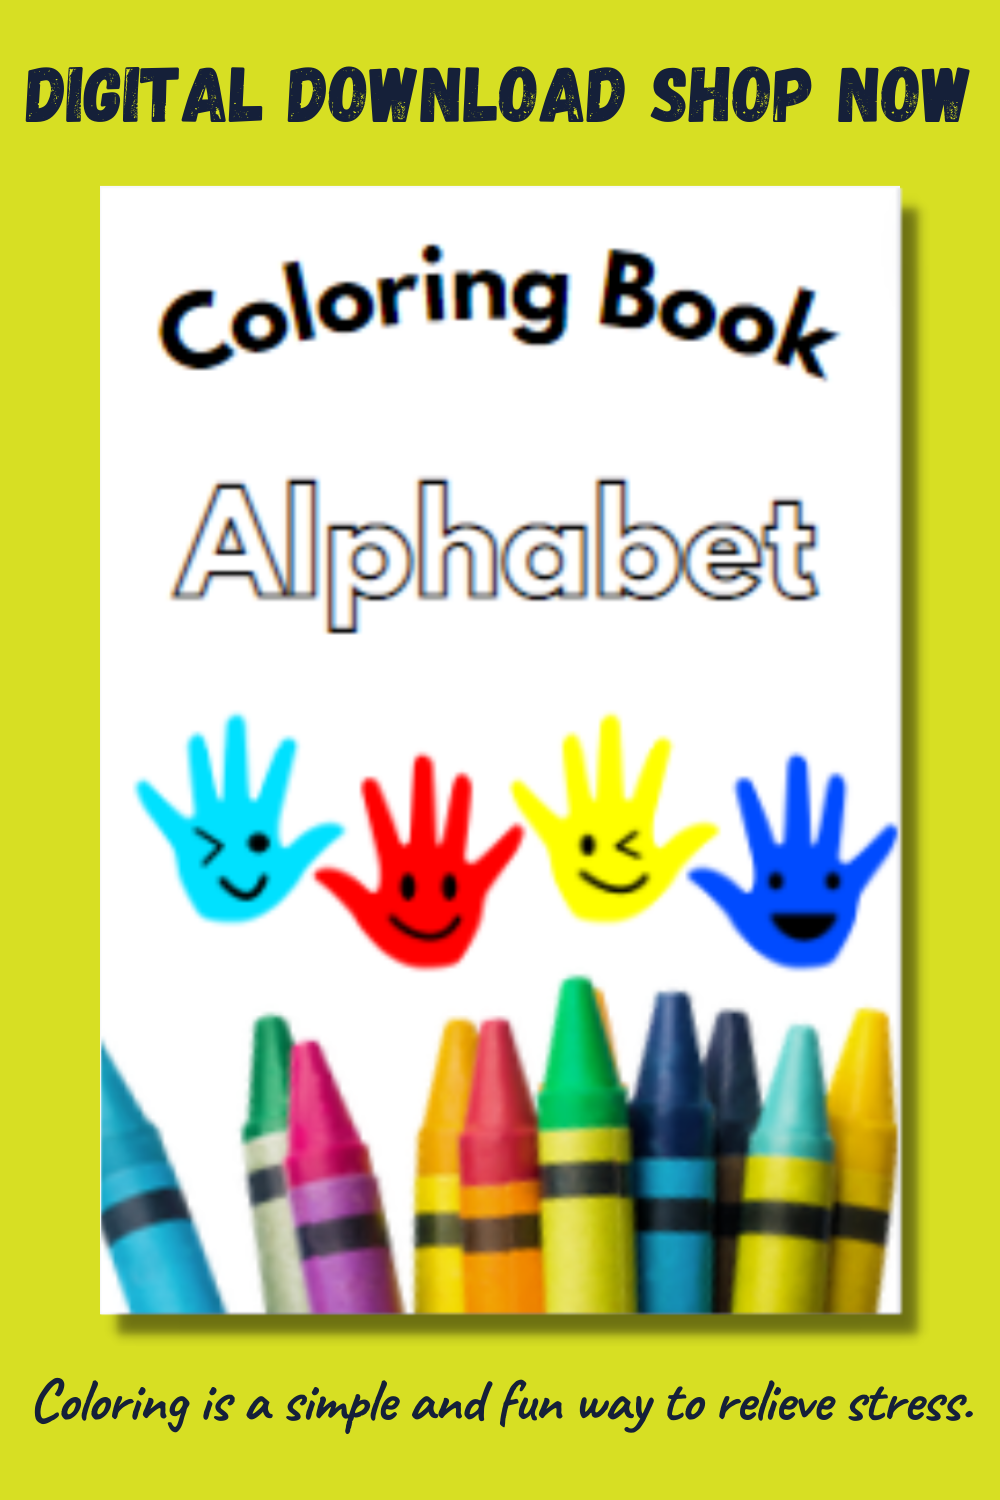 Coloring Book Alphabets pinterest image.